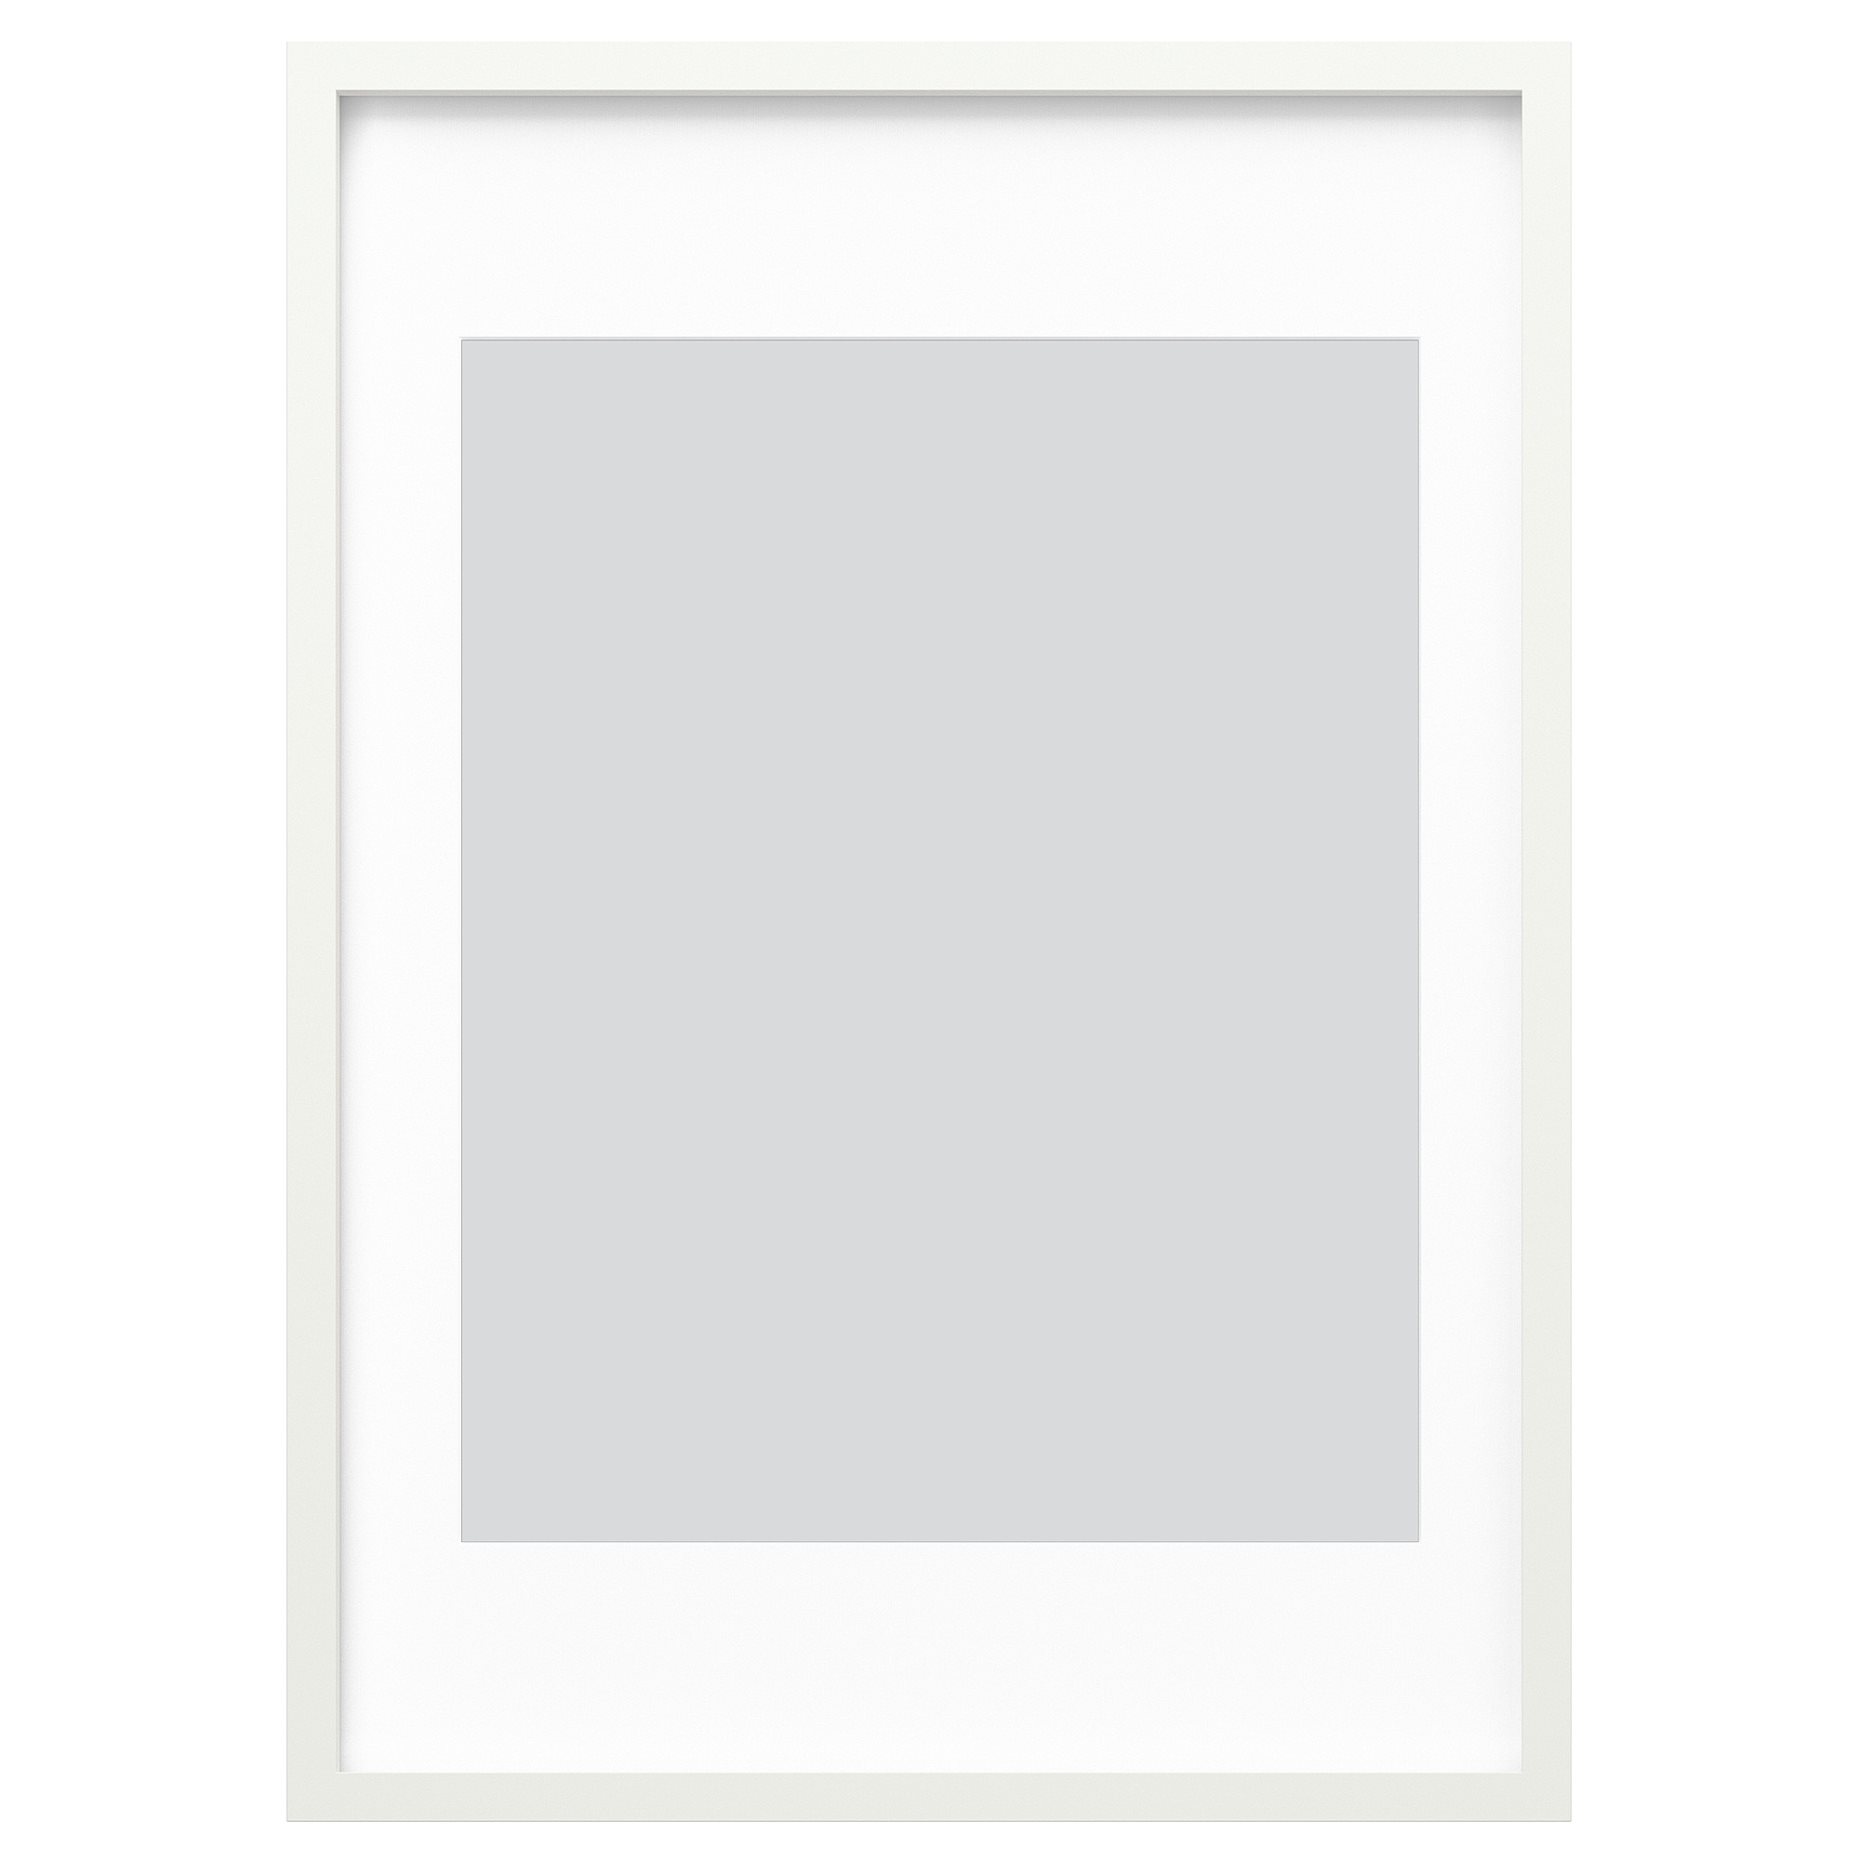 RODALM, frame, 50x70 cm, 905.489.29